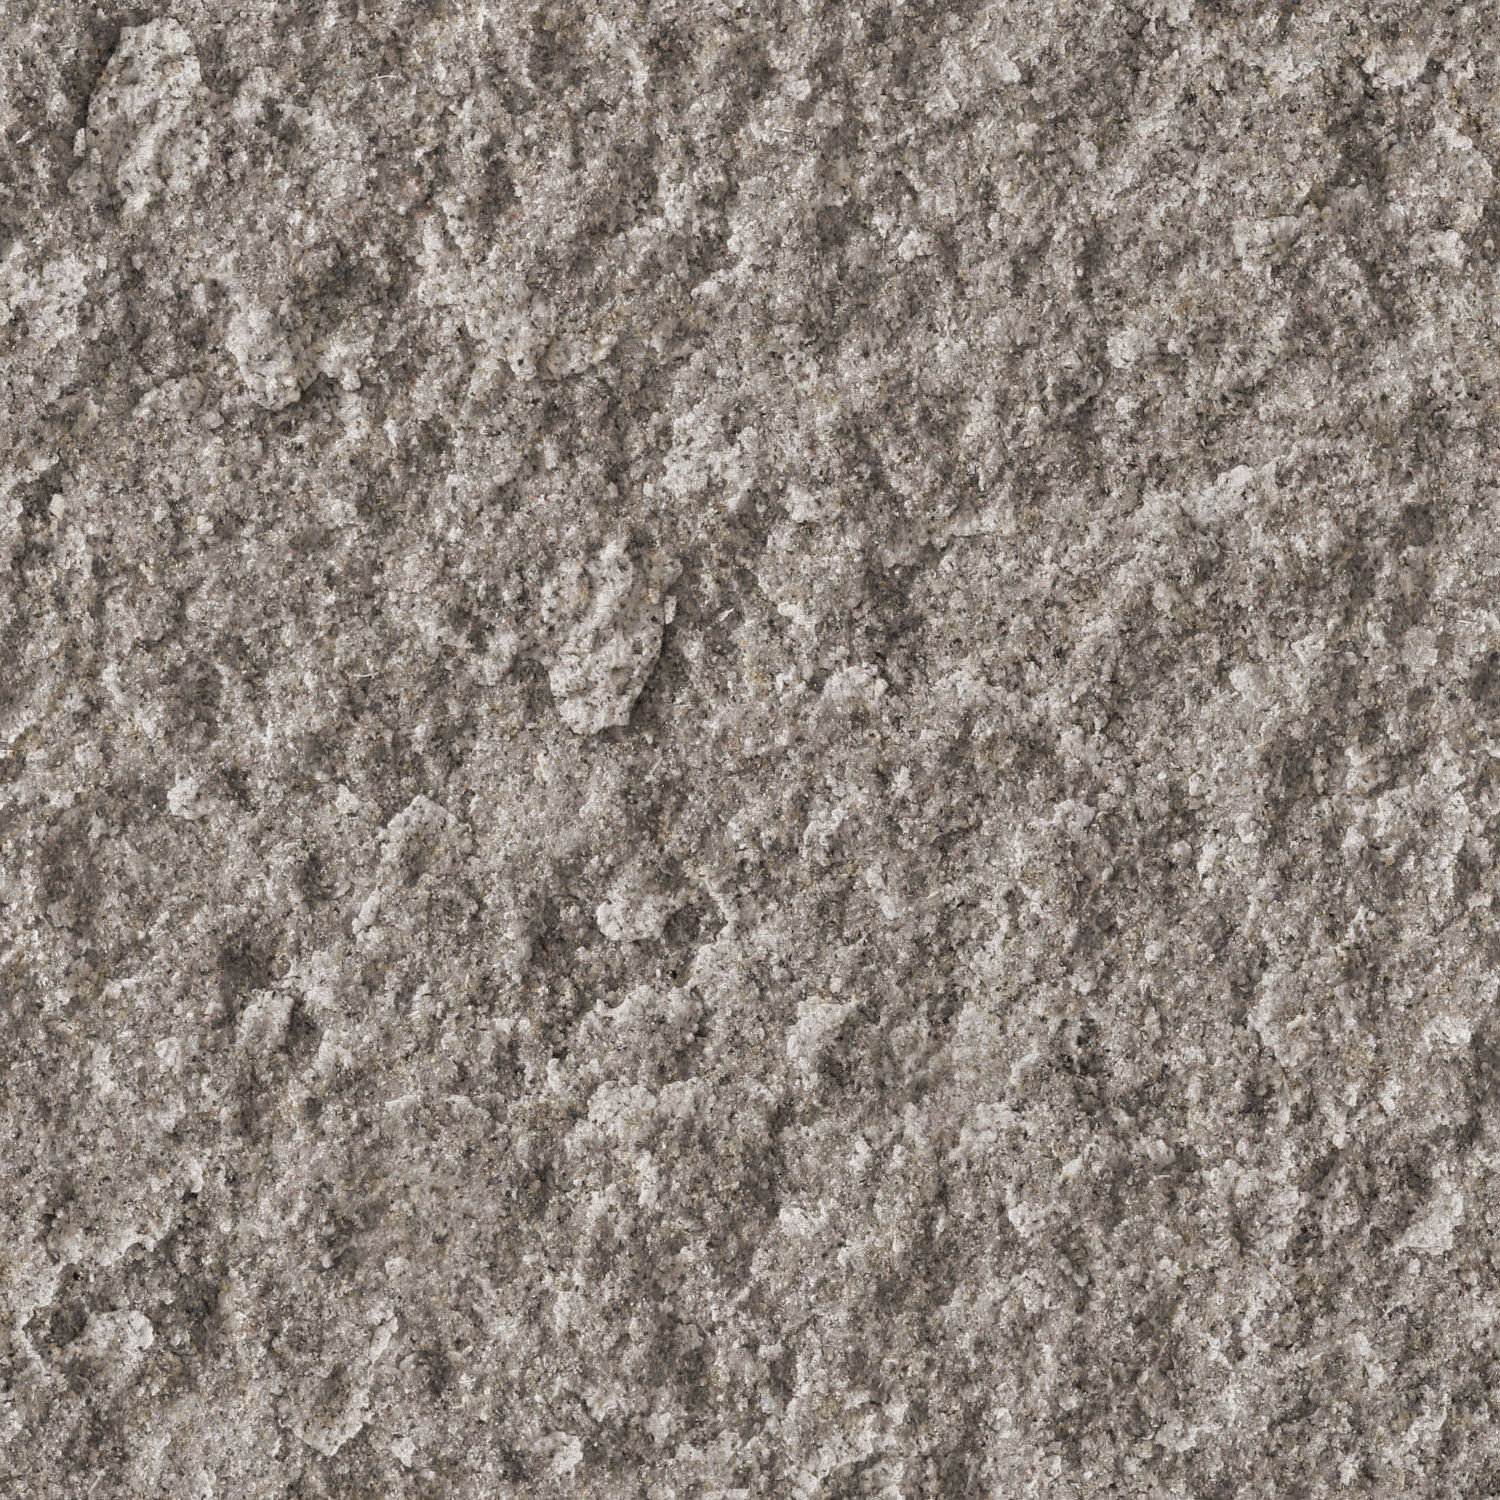 High Resolution Seamless Textures: Free Seamless Stone Textures